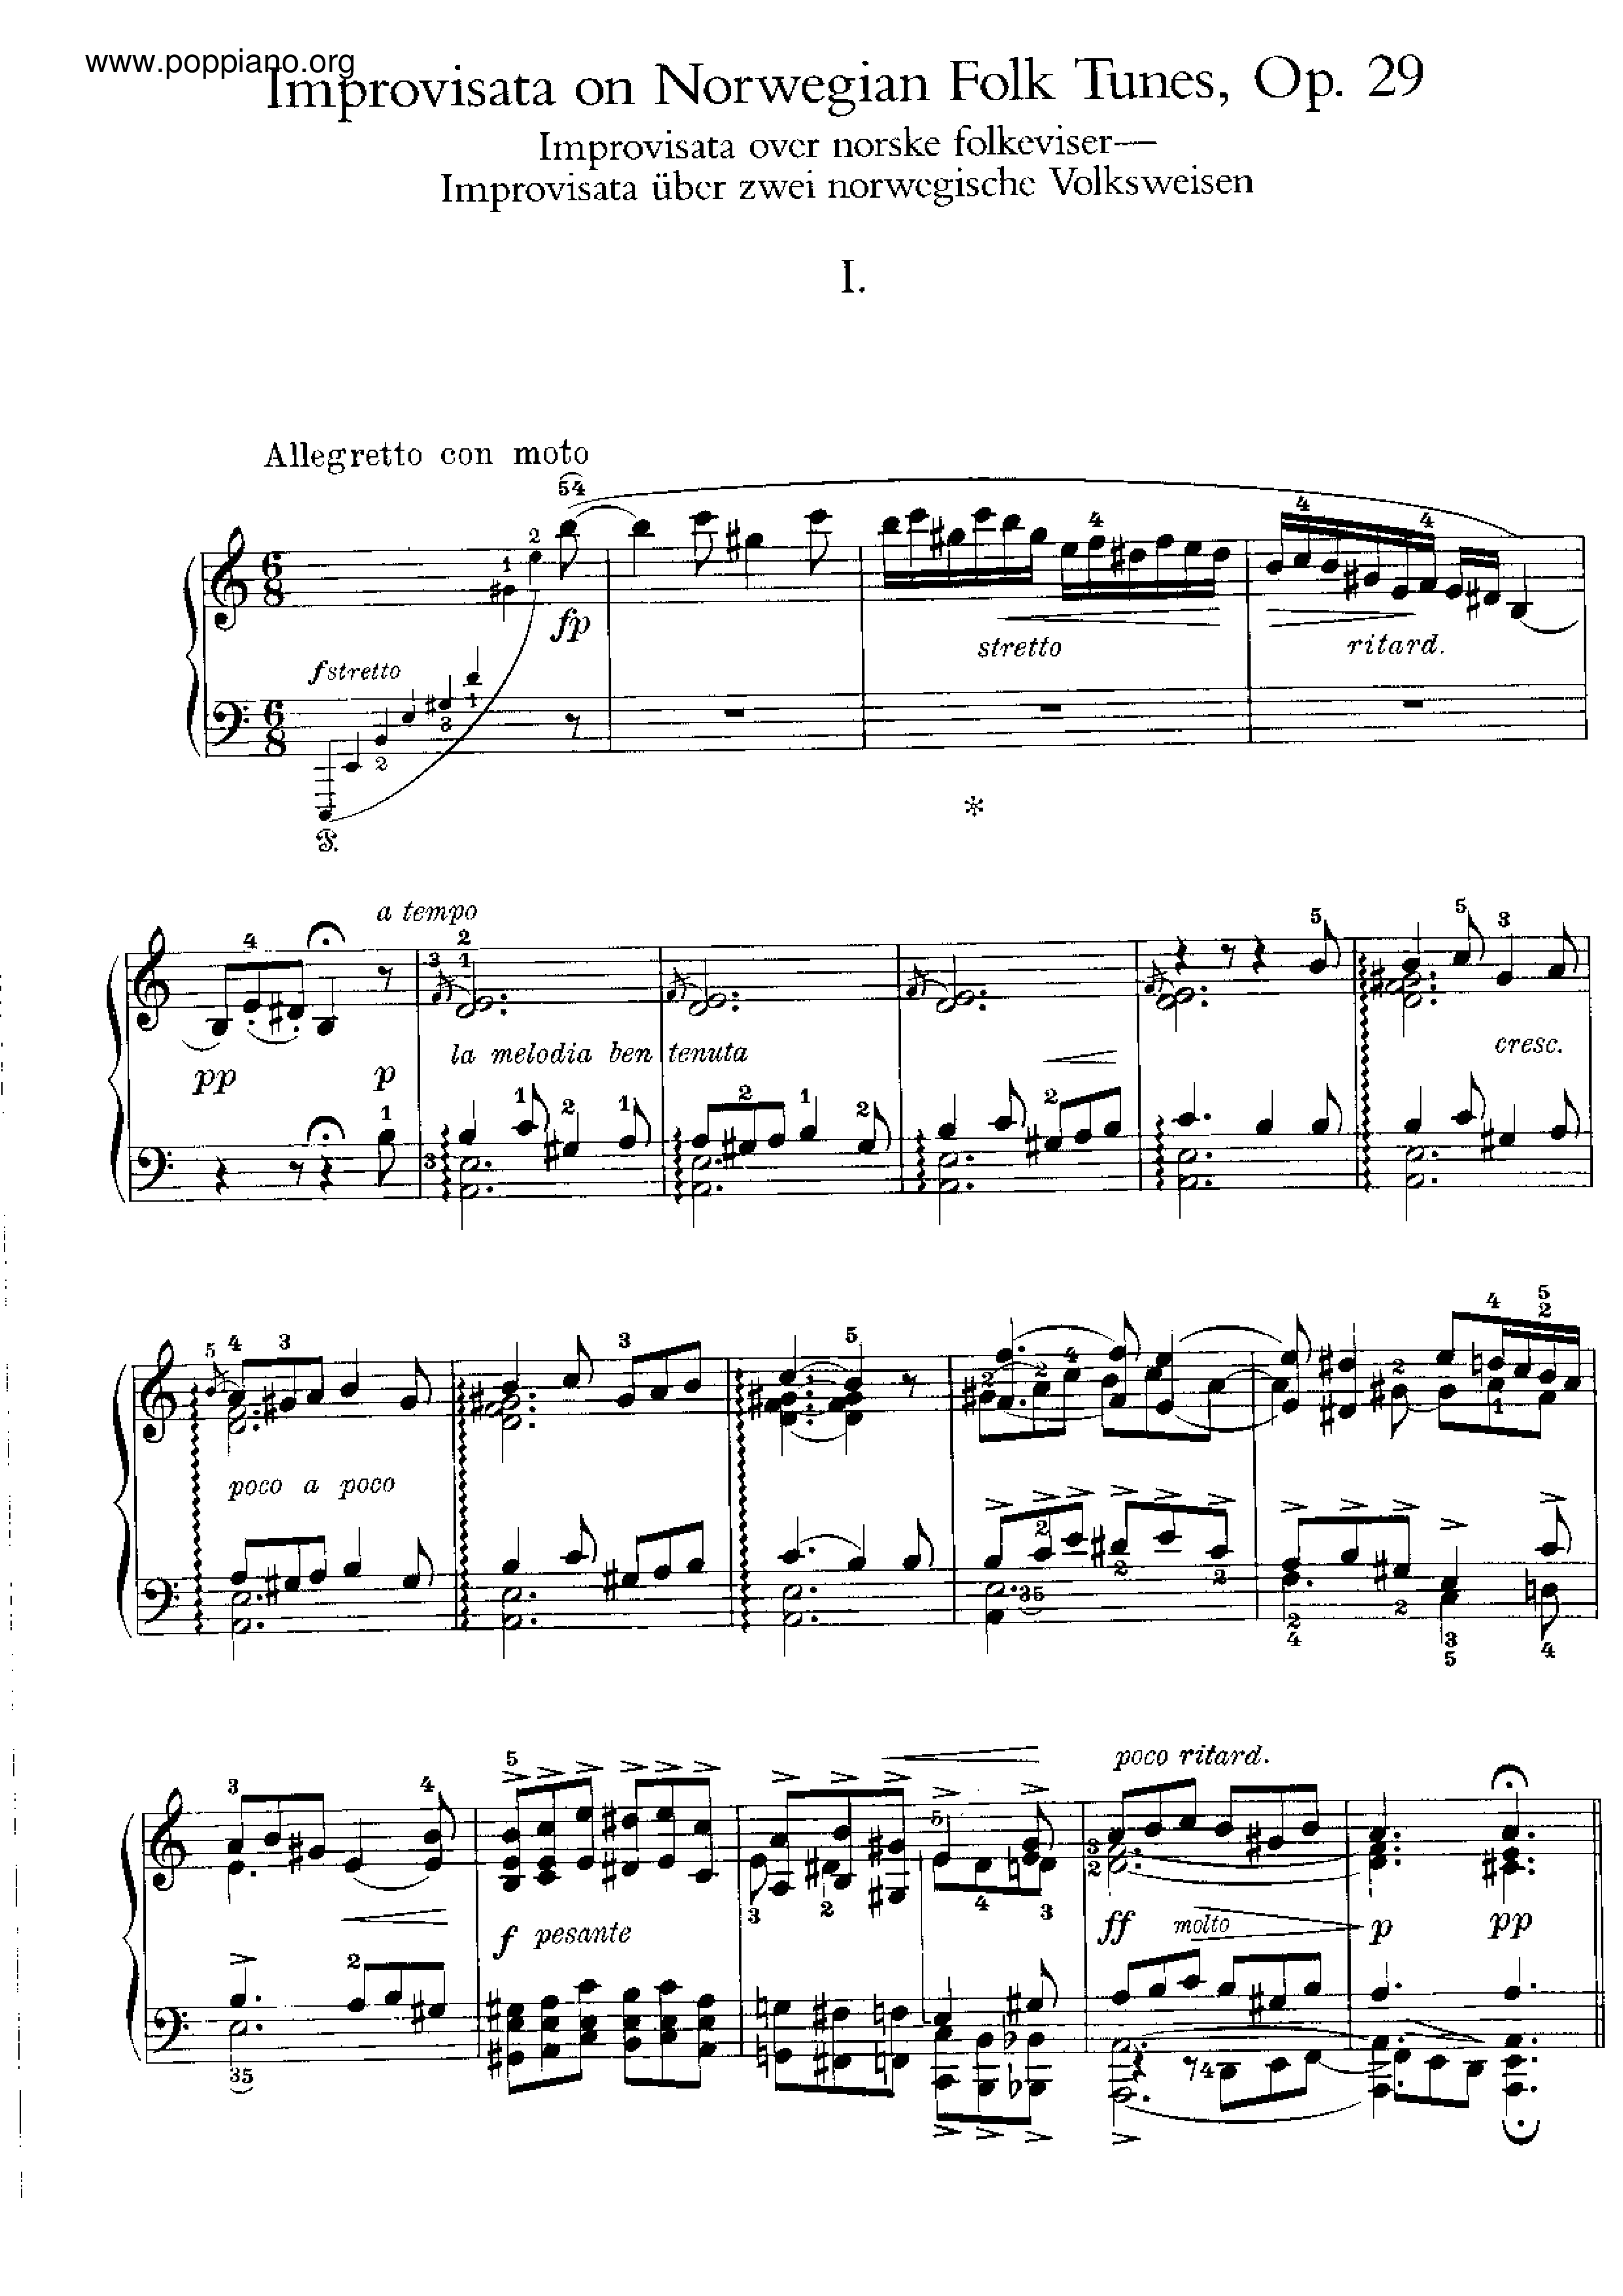 Improvisations on 2 Norwegian Folk Song,s, Op.29ピアノ譜